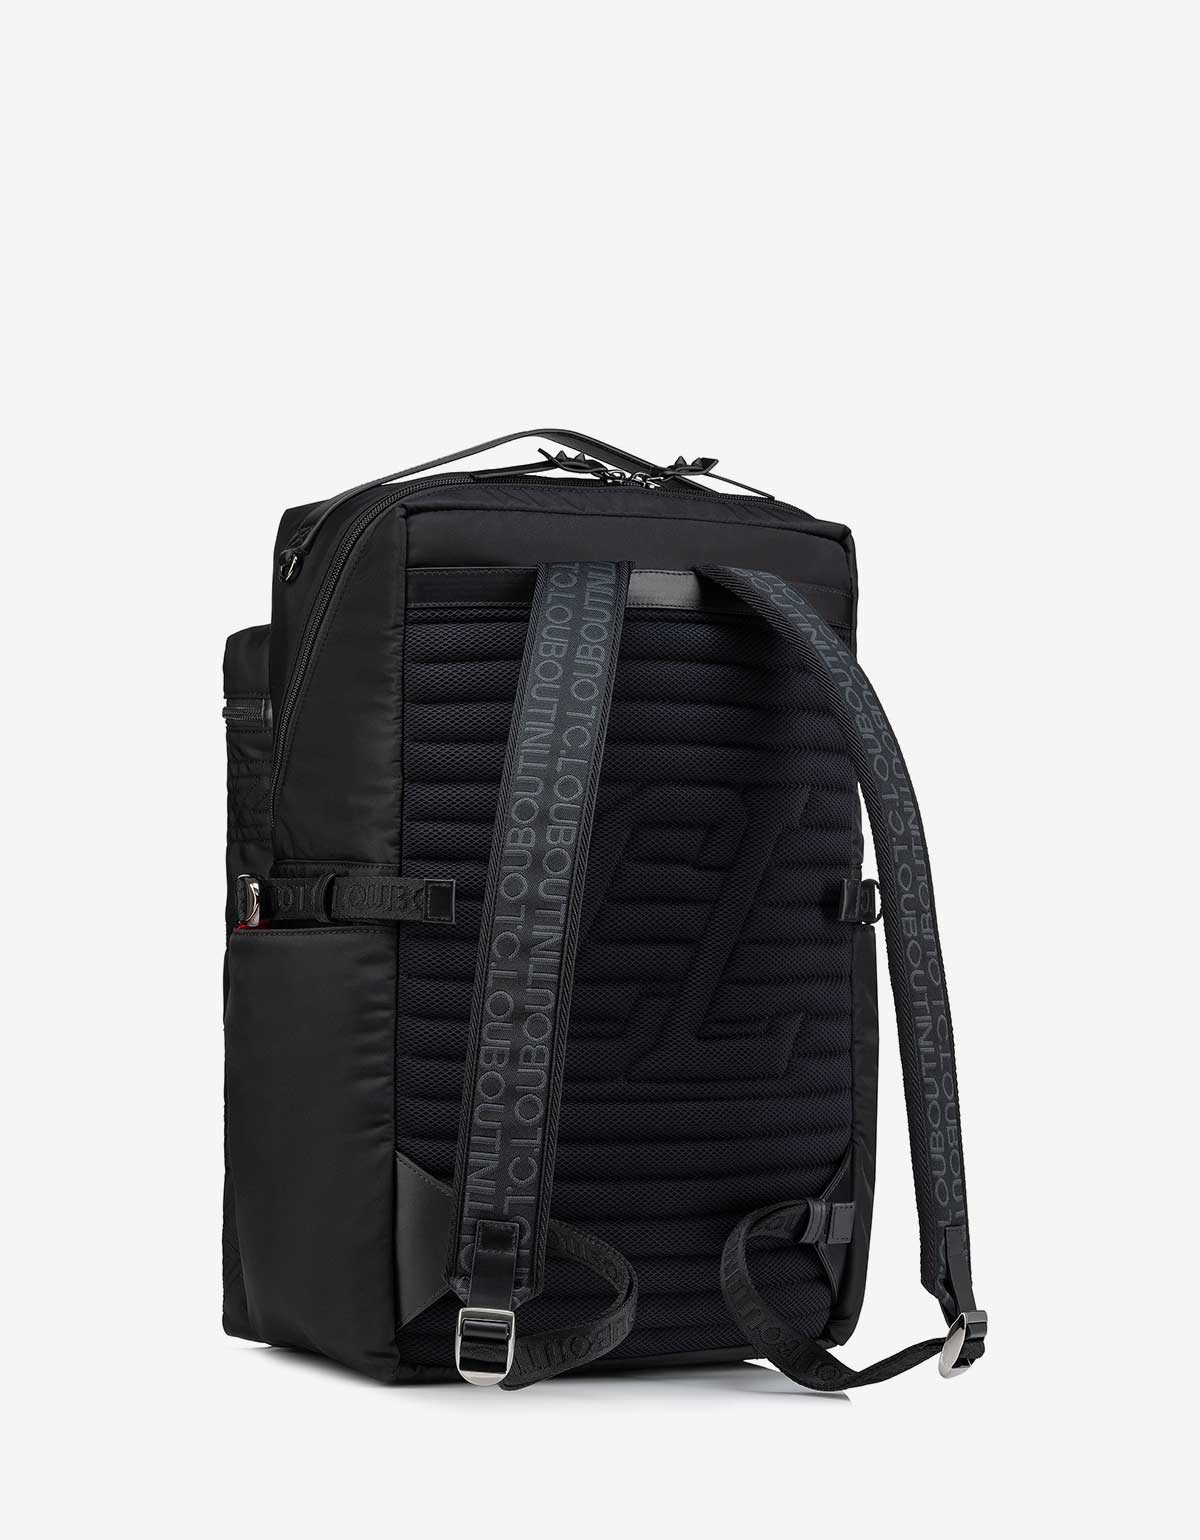 Christian Louboutin Loubideal Black Sneaker Sole Backpack